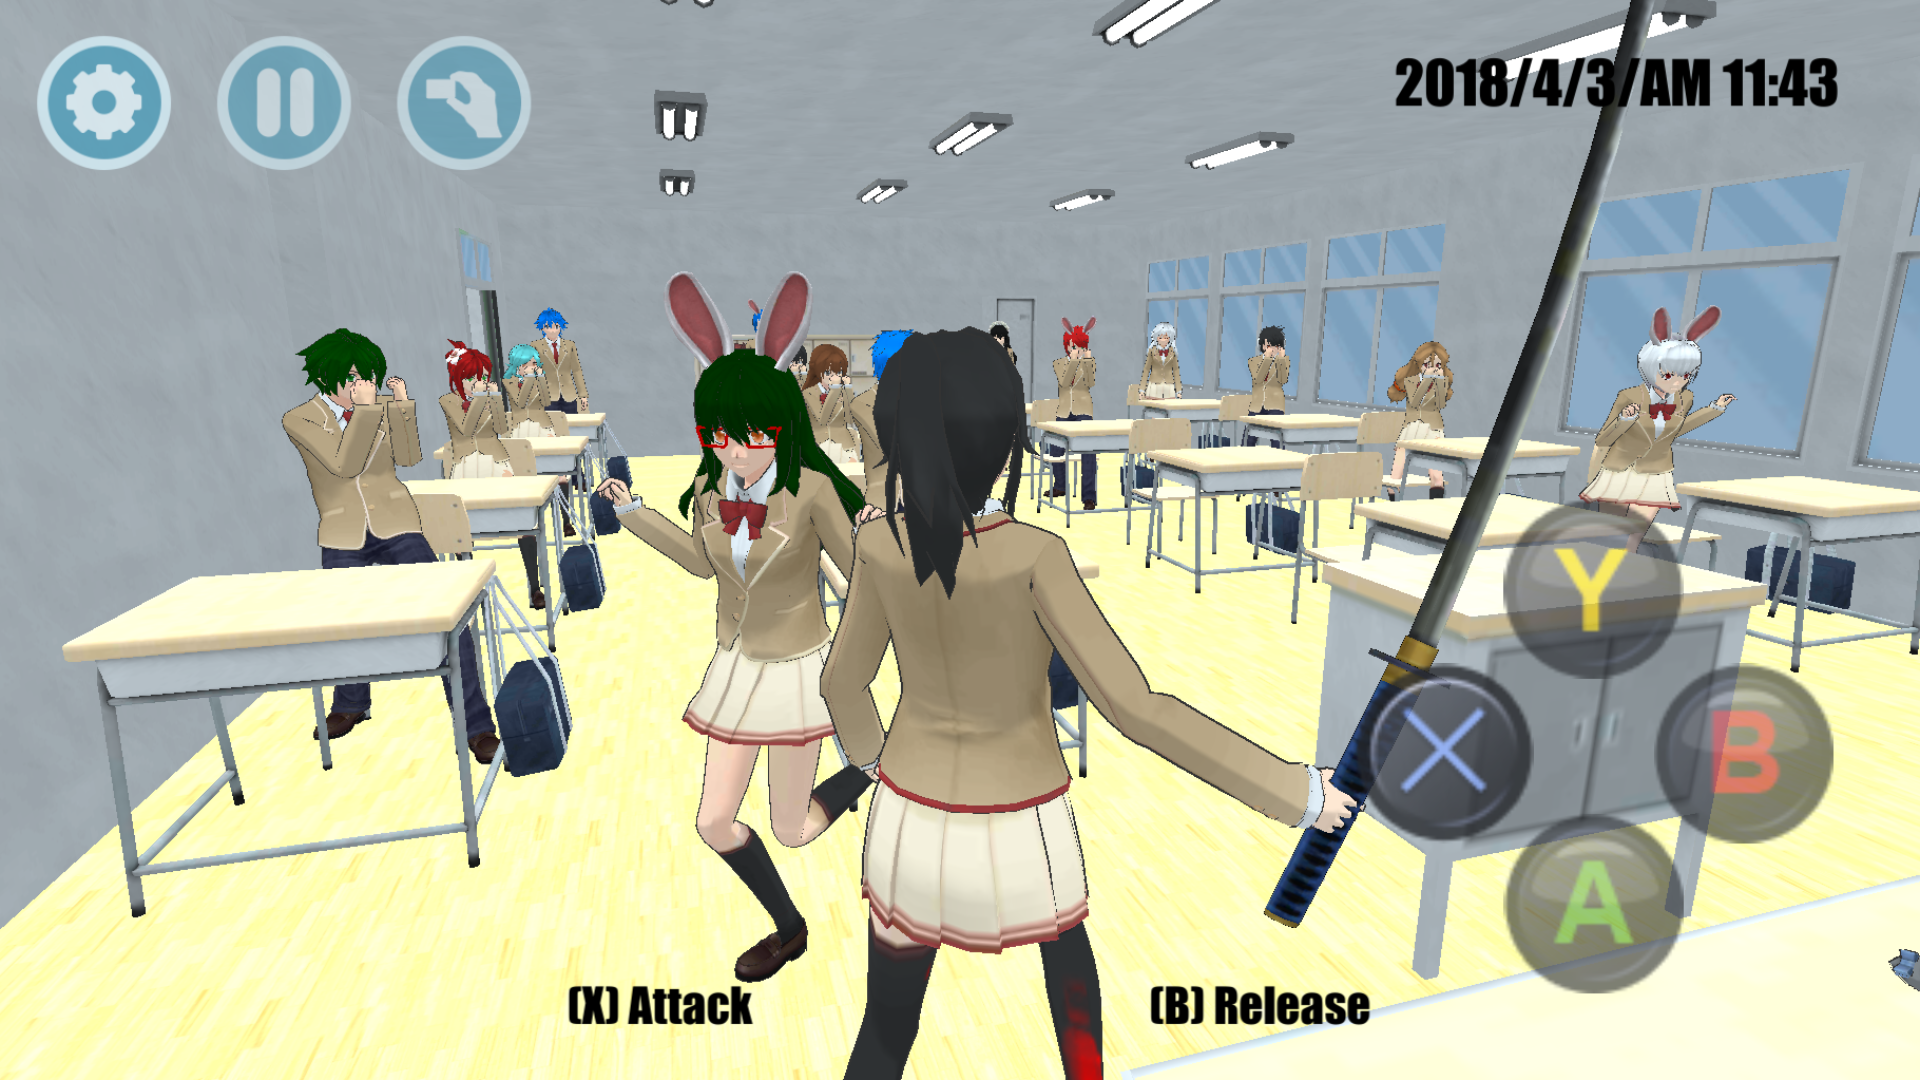 high school simulator 2018 weapons